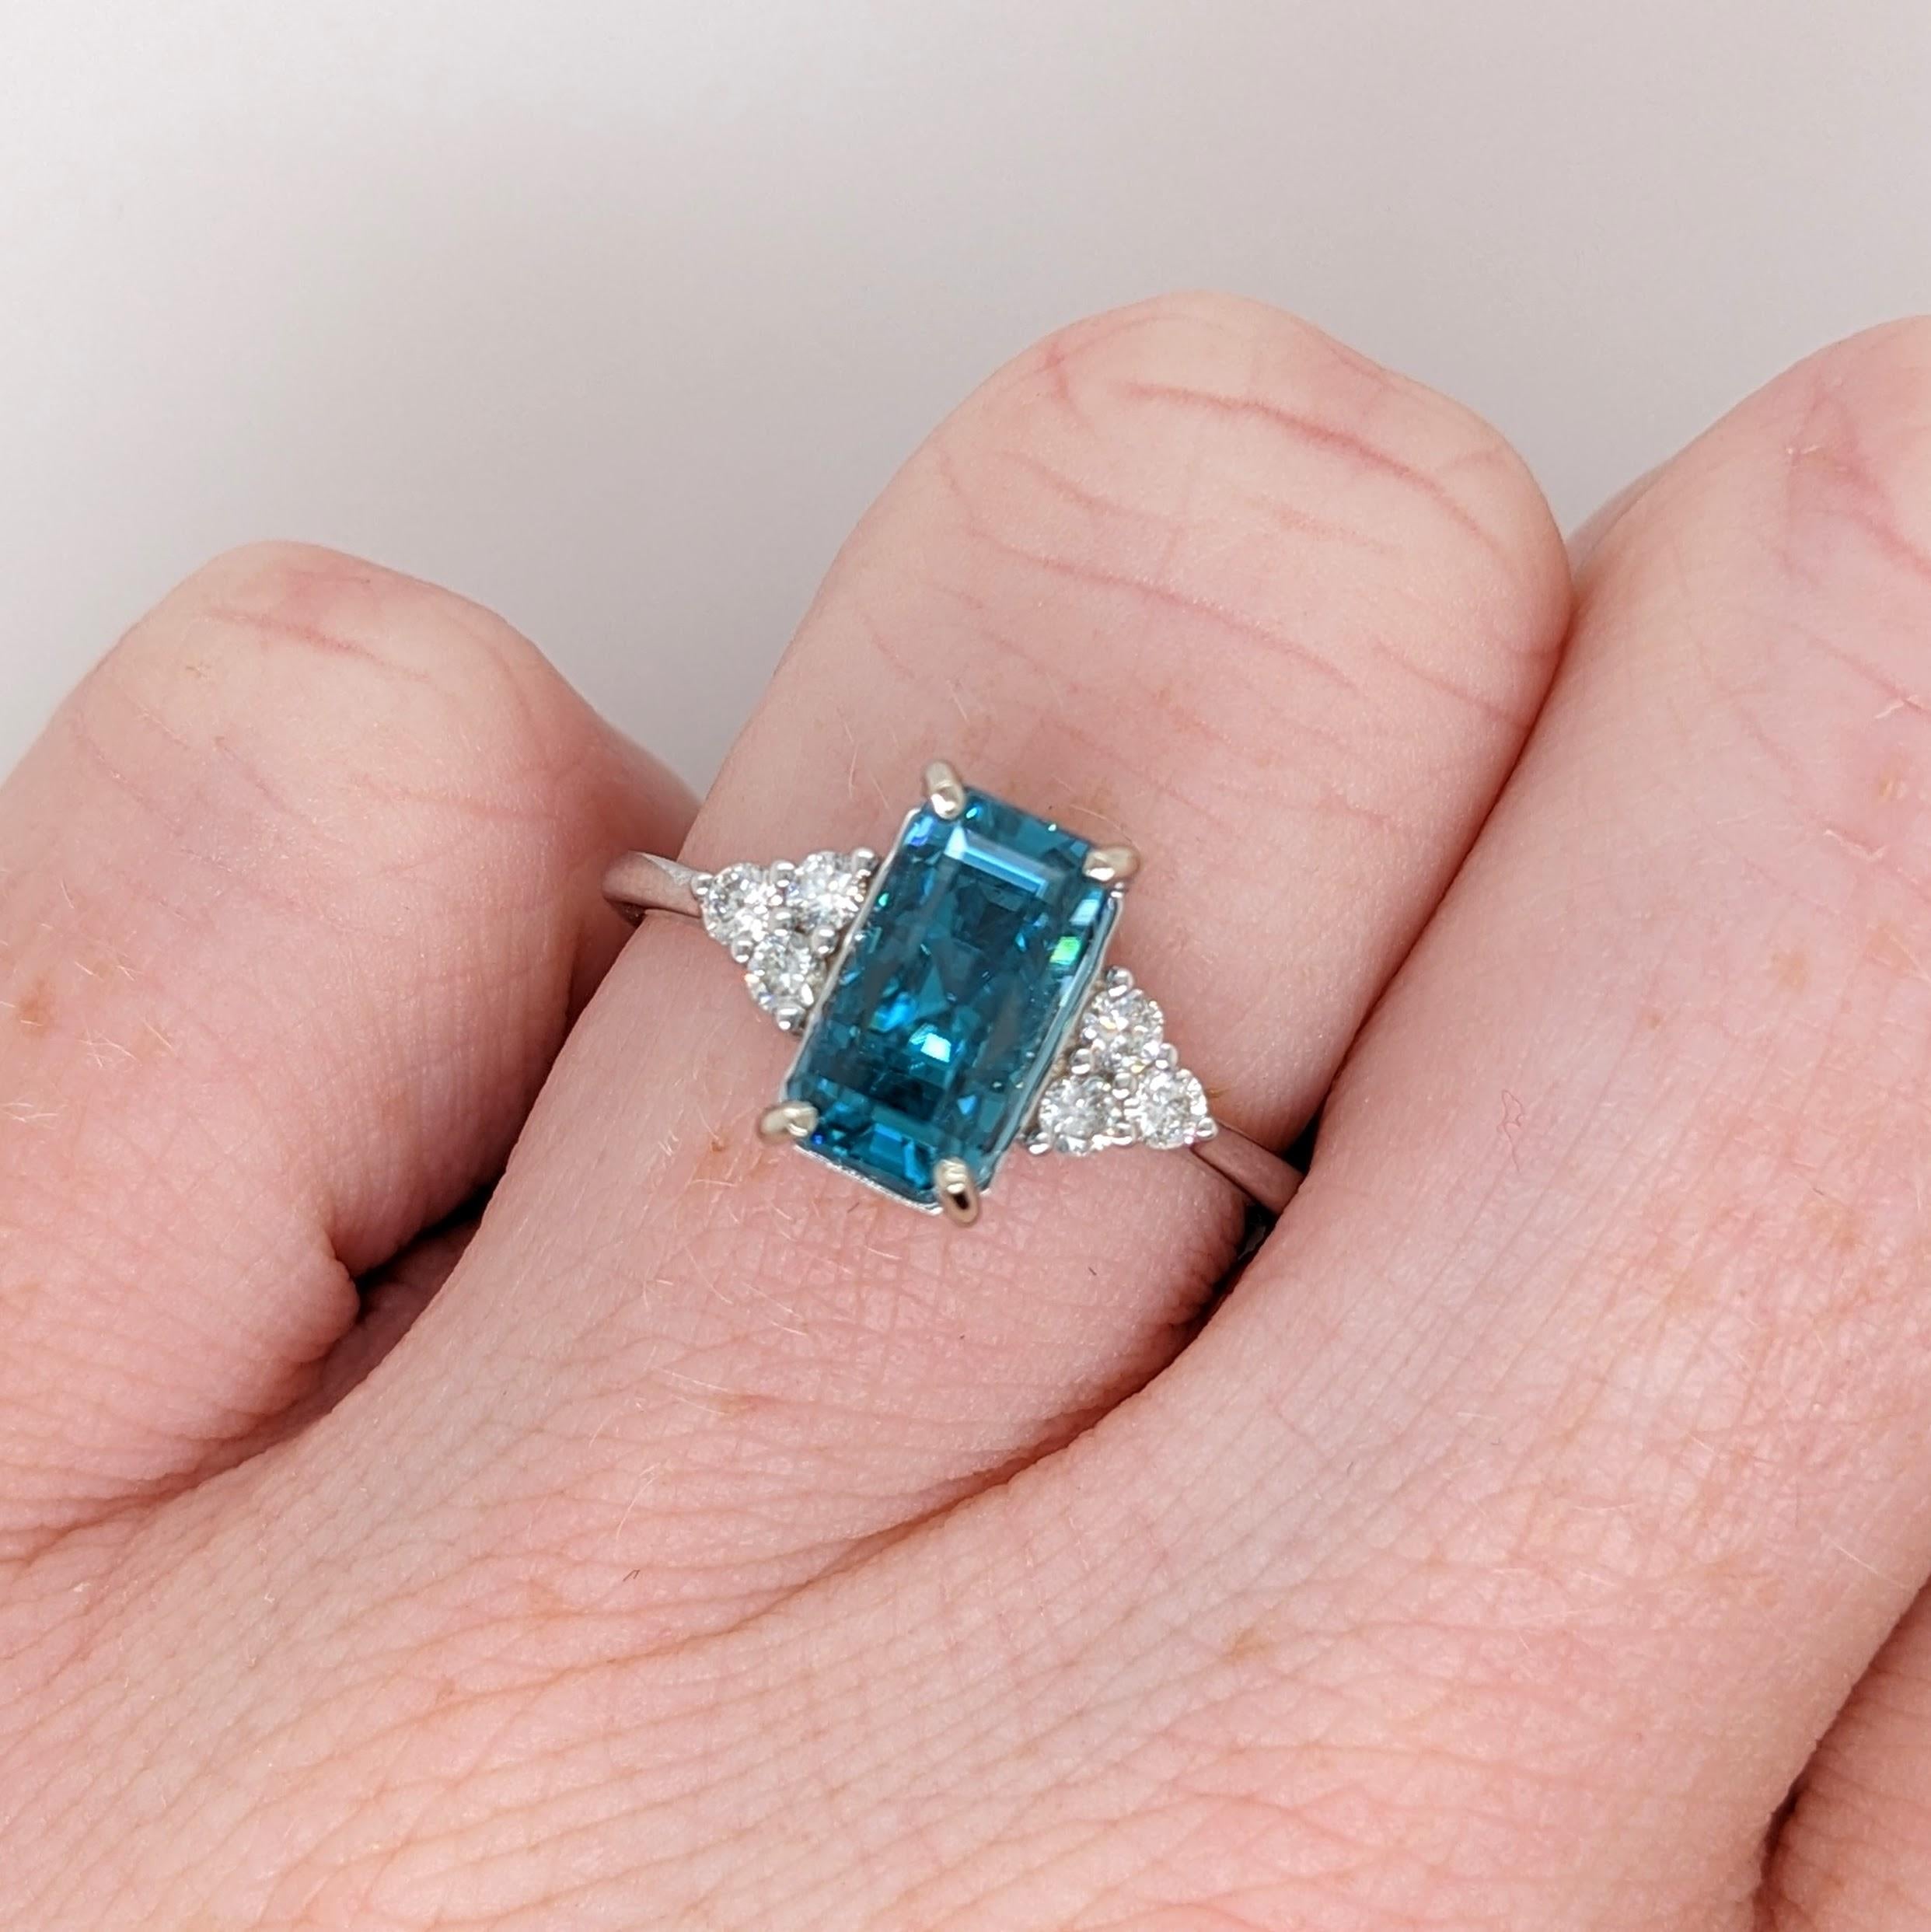 4.21ct Blue Zircon w Diamond Accents in 14K White Gold Emerald Cut 9.5x6mm 2